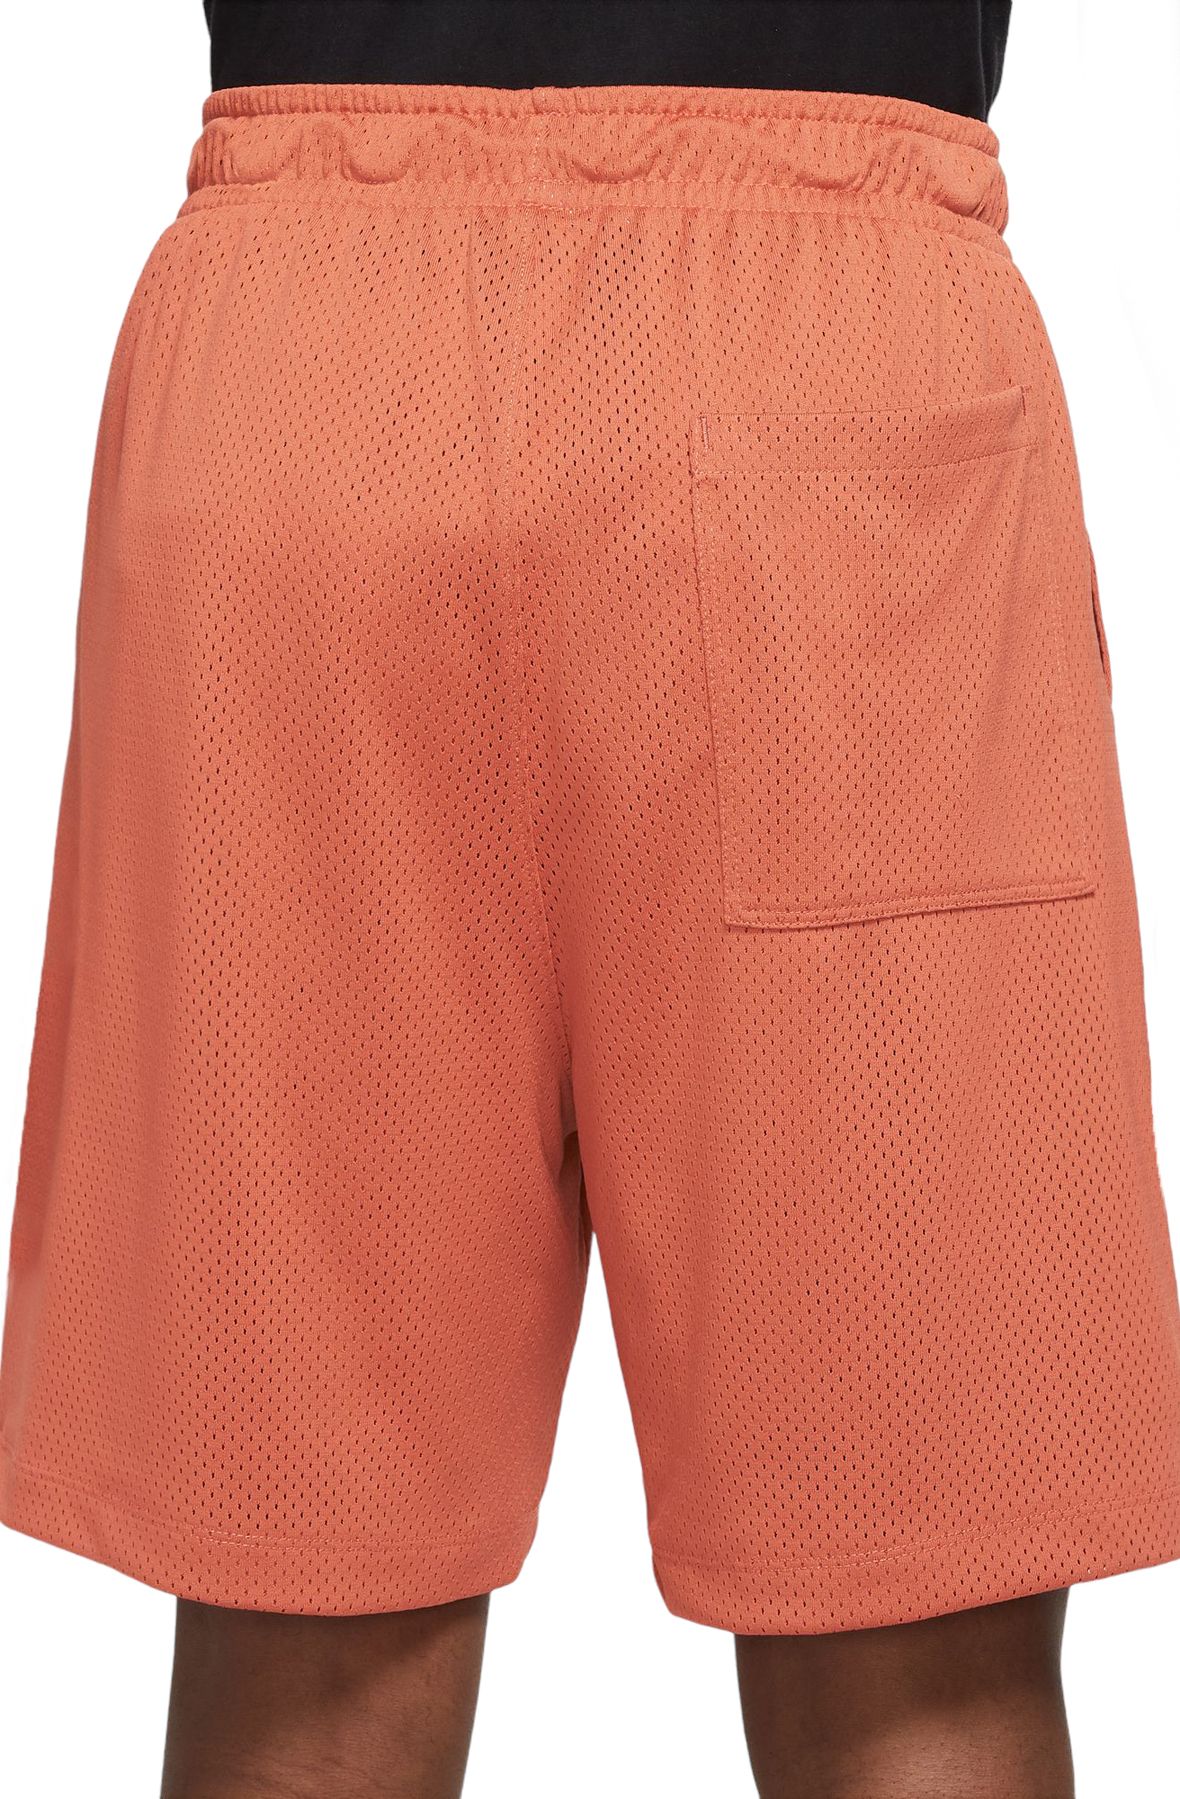 Nike Sportswear Bum bag - light sienna/white/orange 